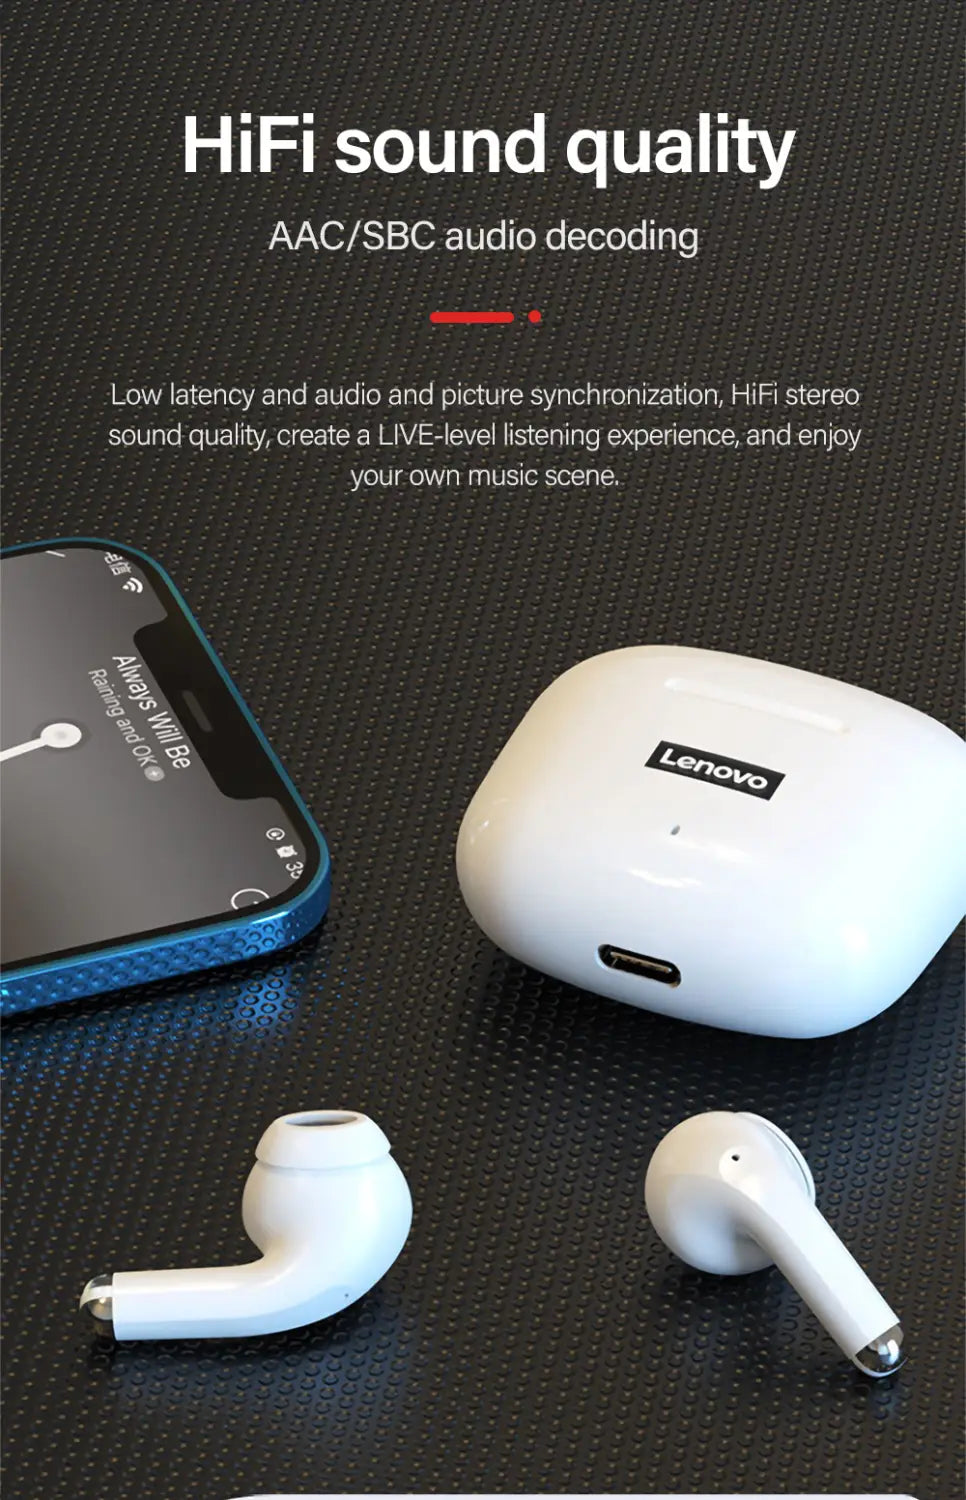 Ecouteur Audio Bluetooth 5.1 Lenovo